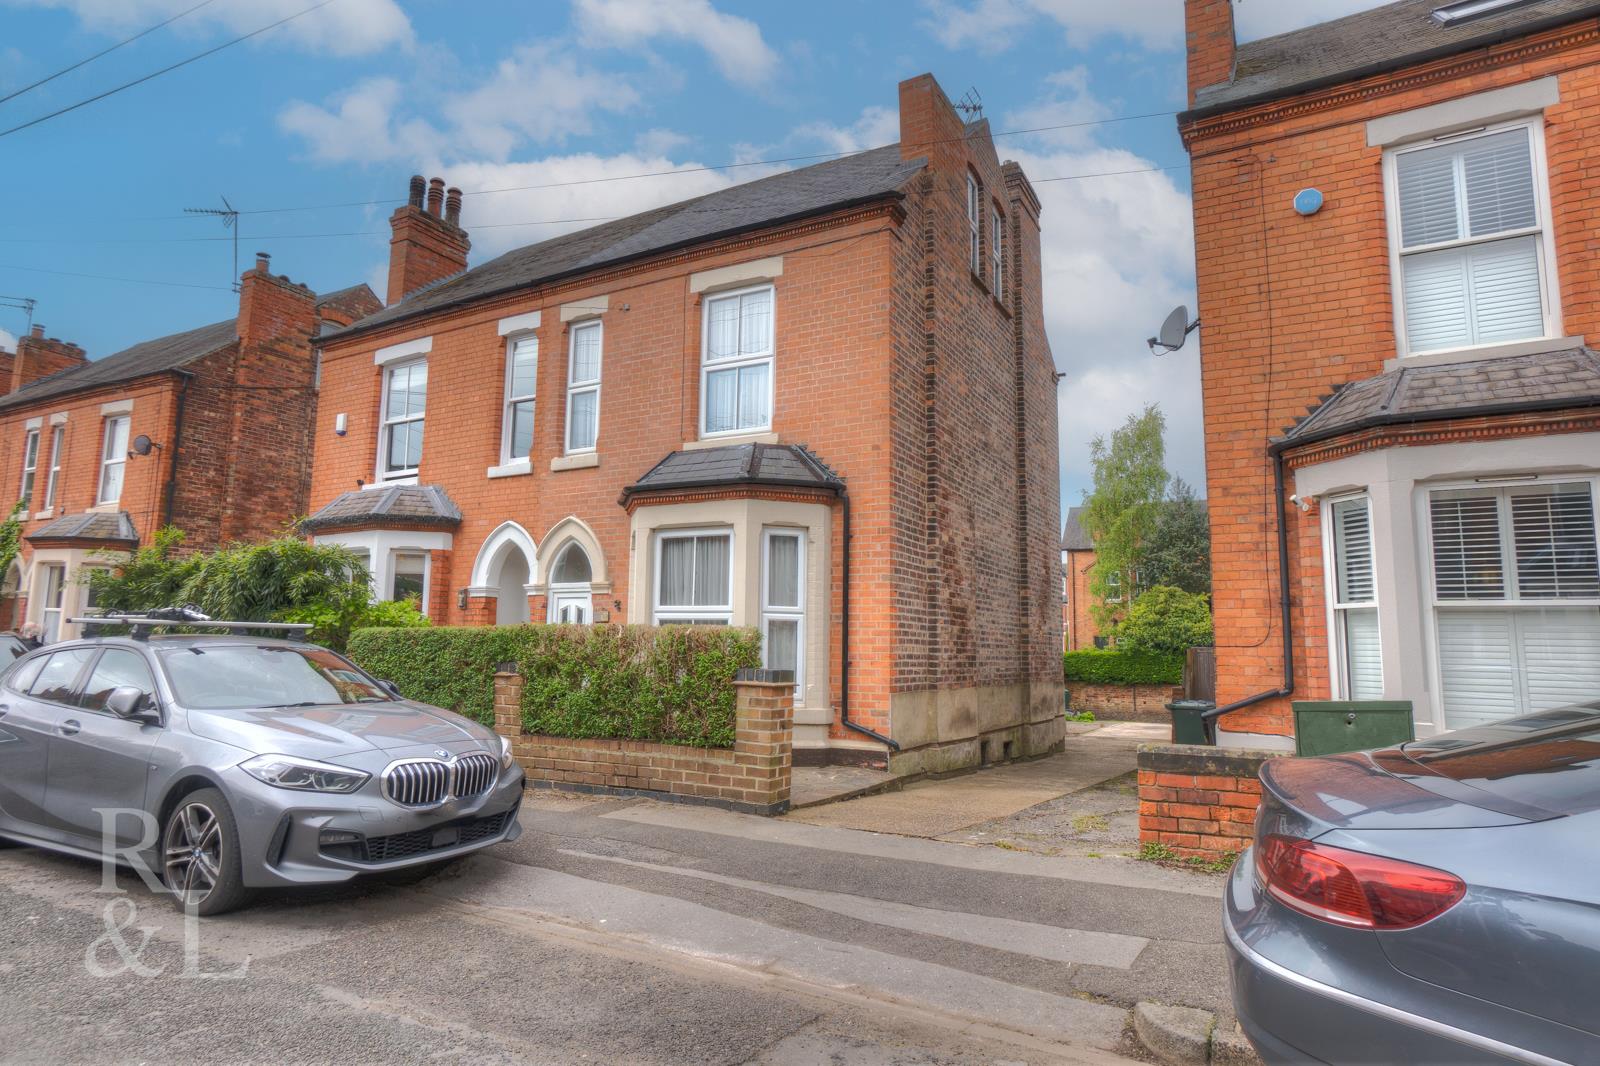 Property image for Epperstone Road, West Bridgford, Nottingham